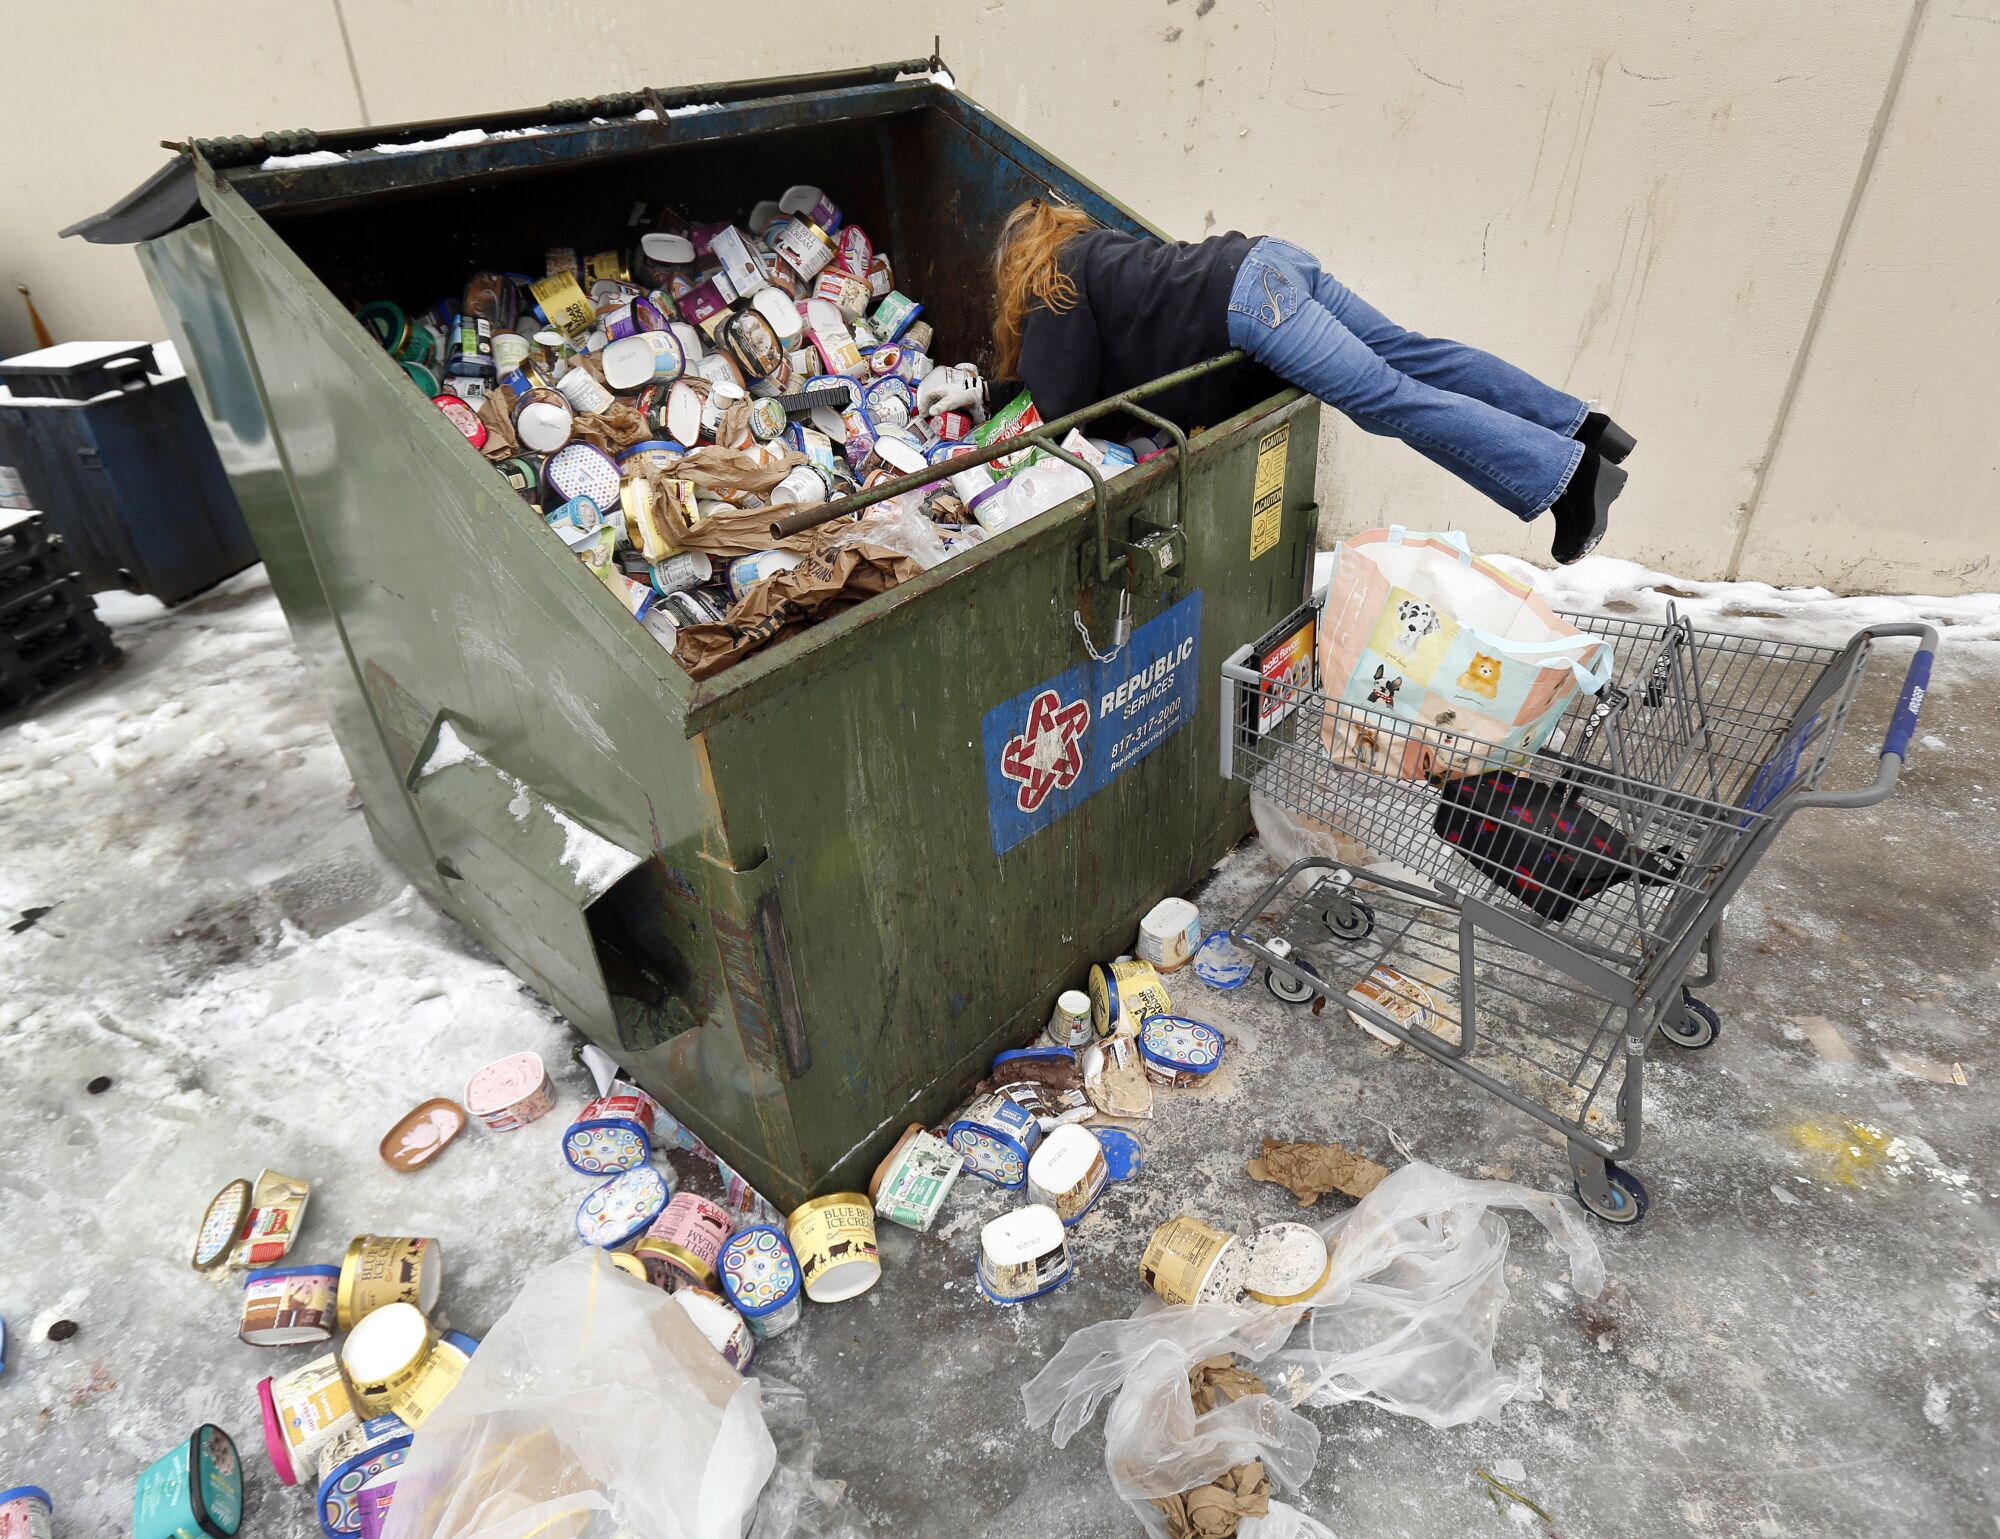 A woman climbs into a dumpster.